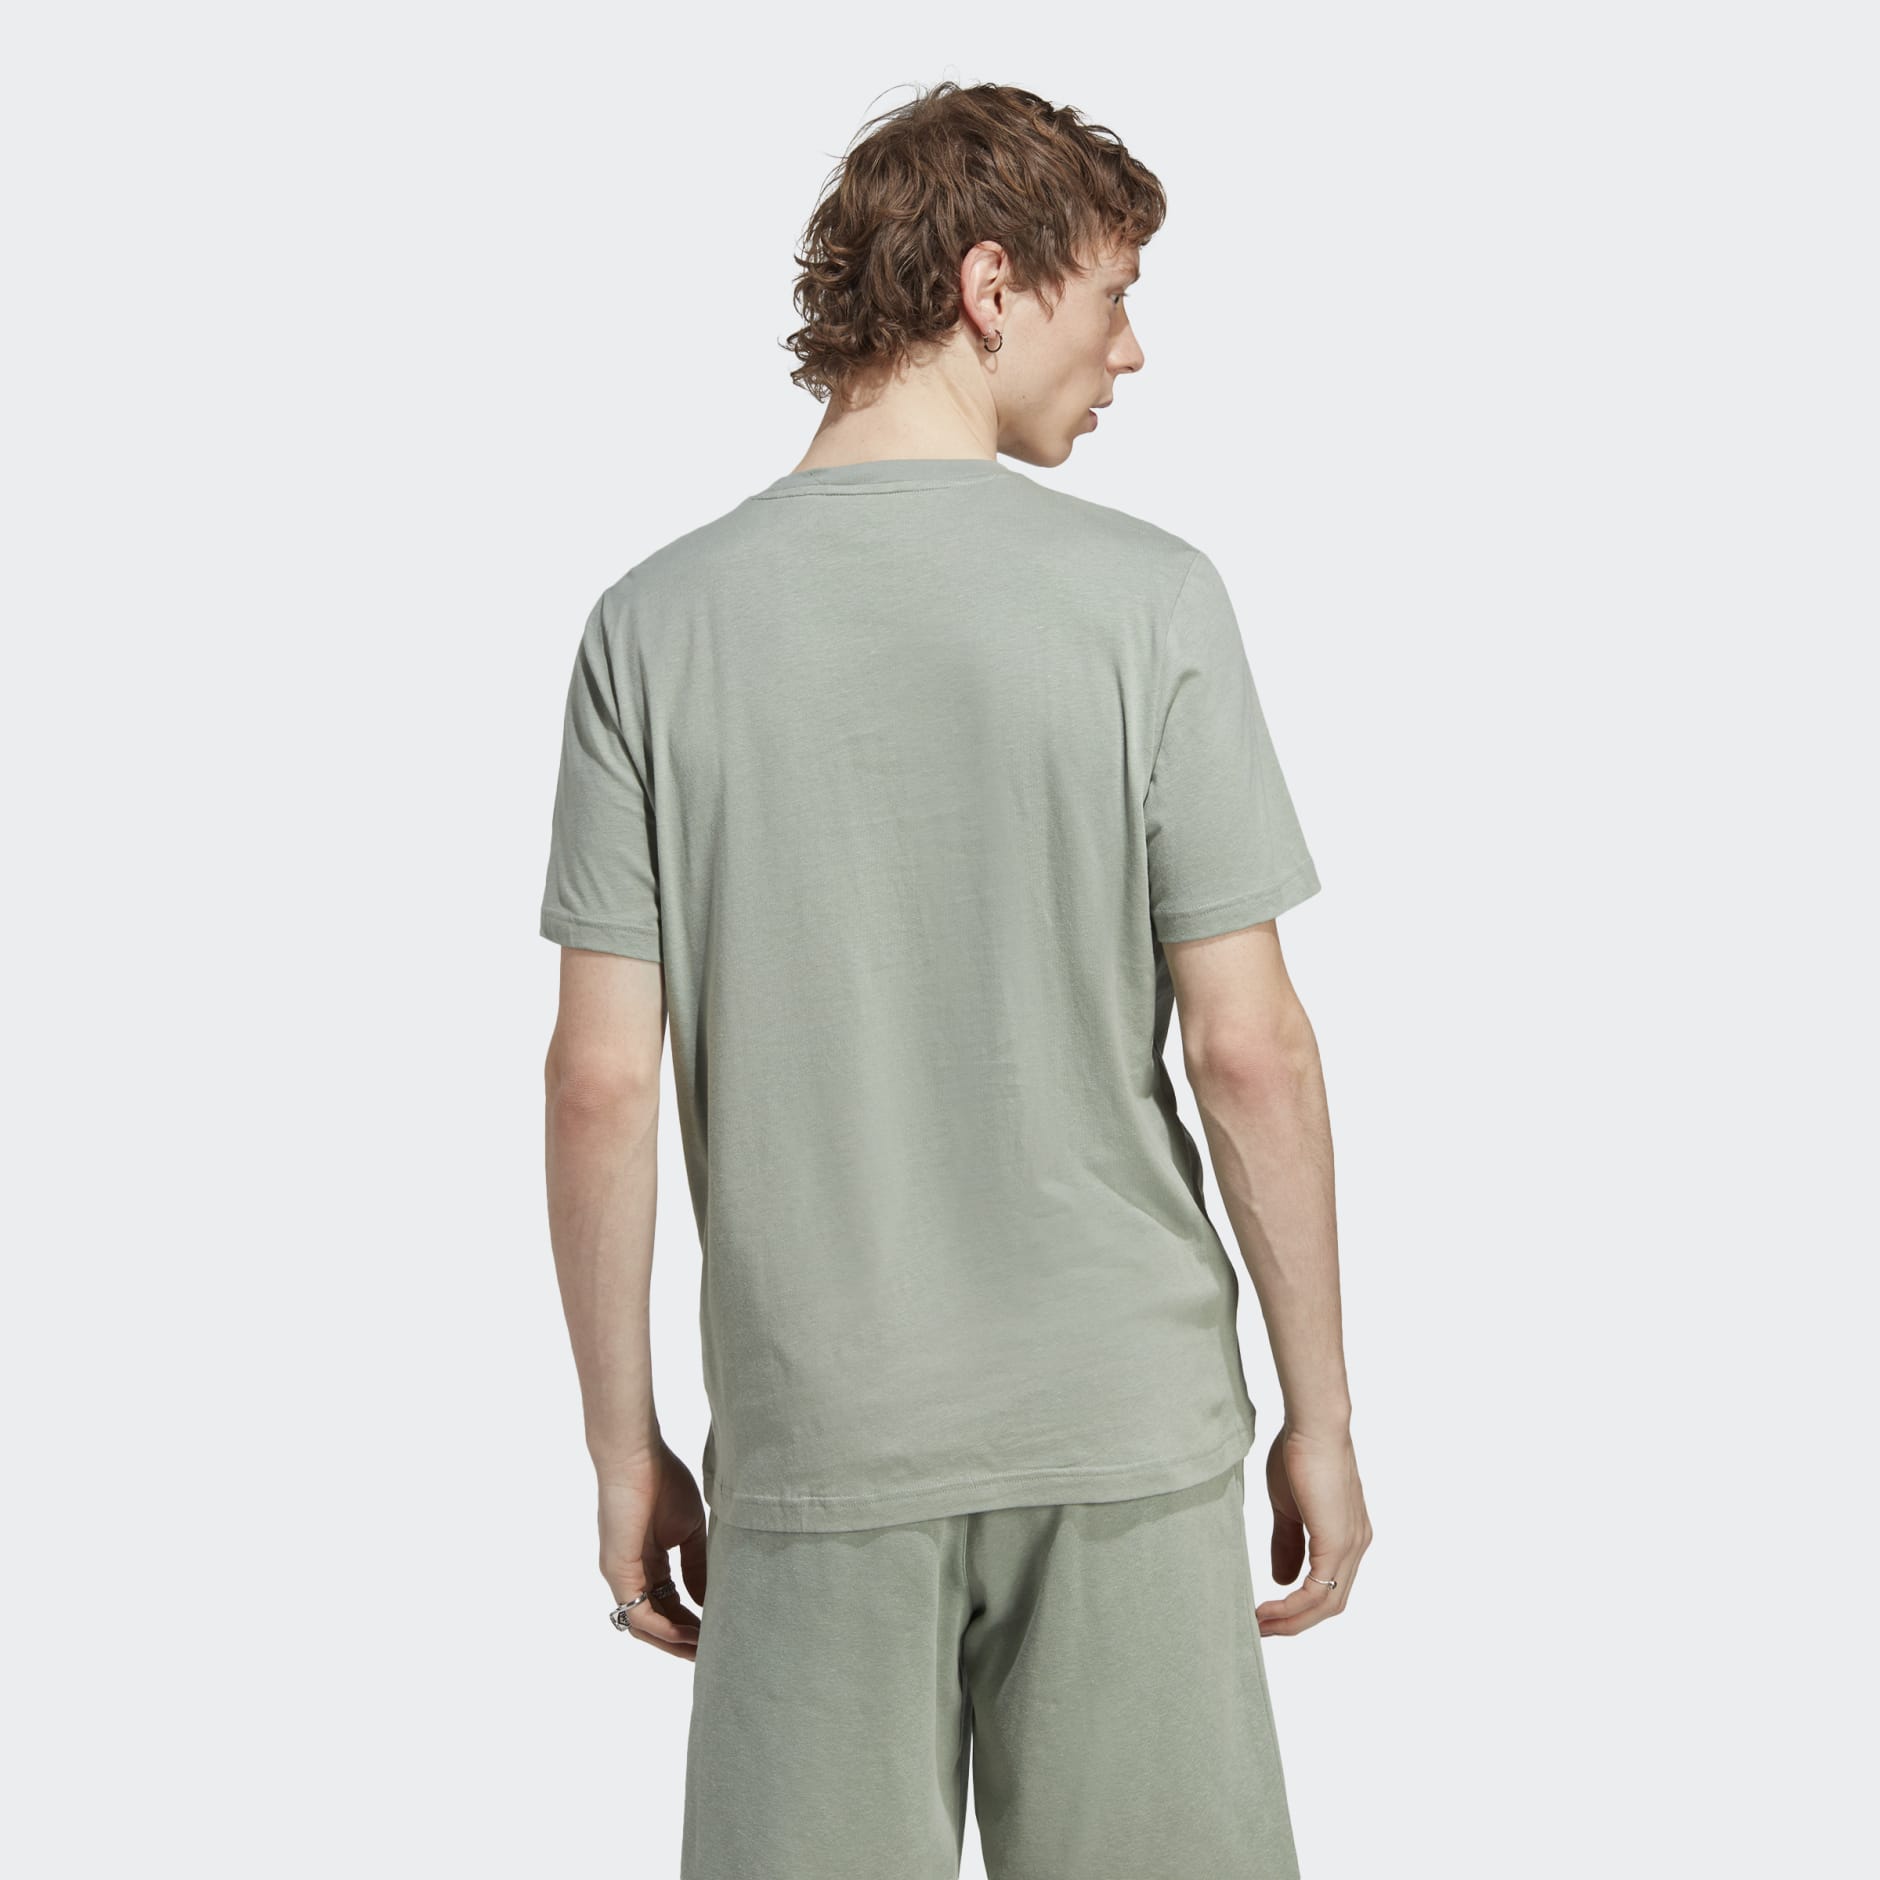 Clothing - Essentials+ Made With Hemp Tee - Green | adidas Israel